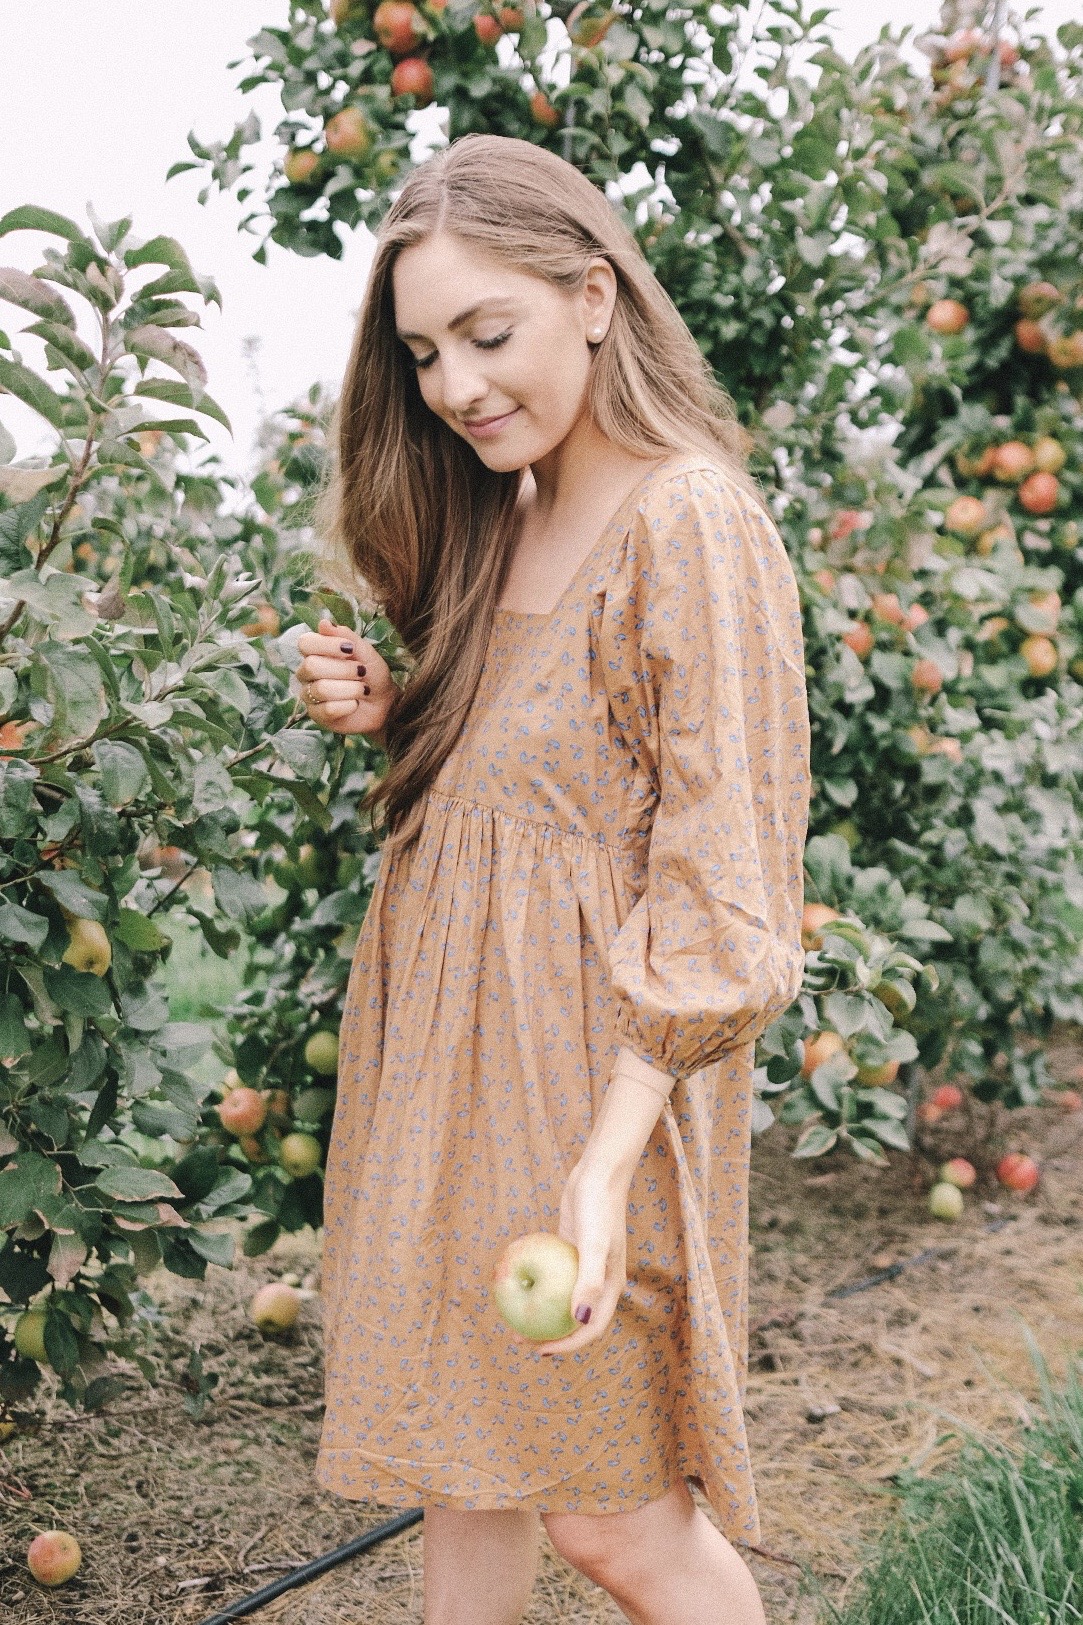 Apple picking | Miss Madeline Rose